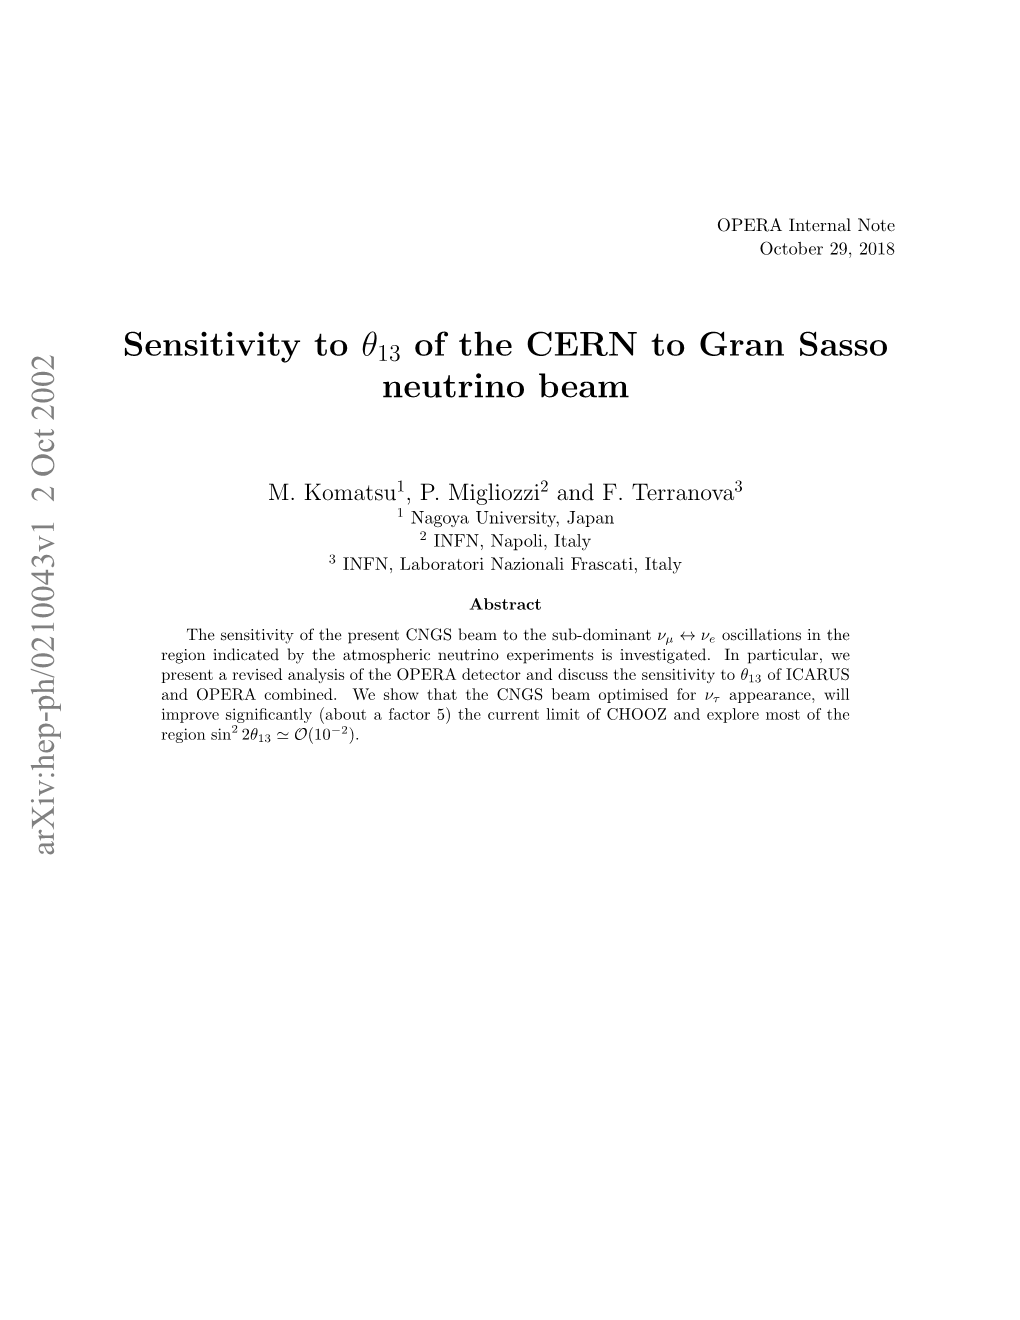 Sensitivity to Θ13 of the CERN to Gran Sasso Neutrino Beam